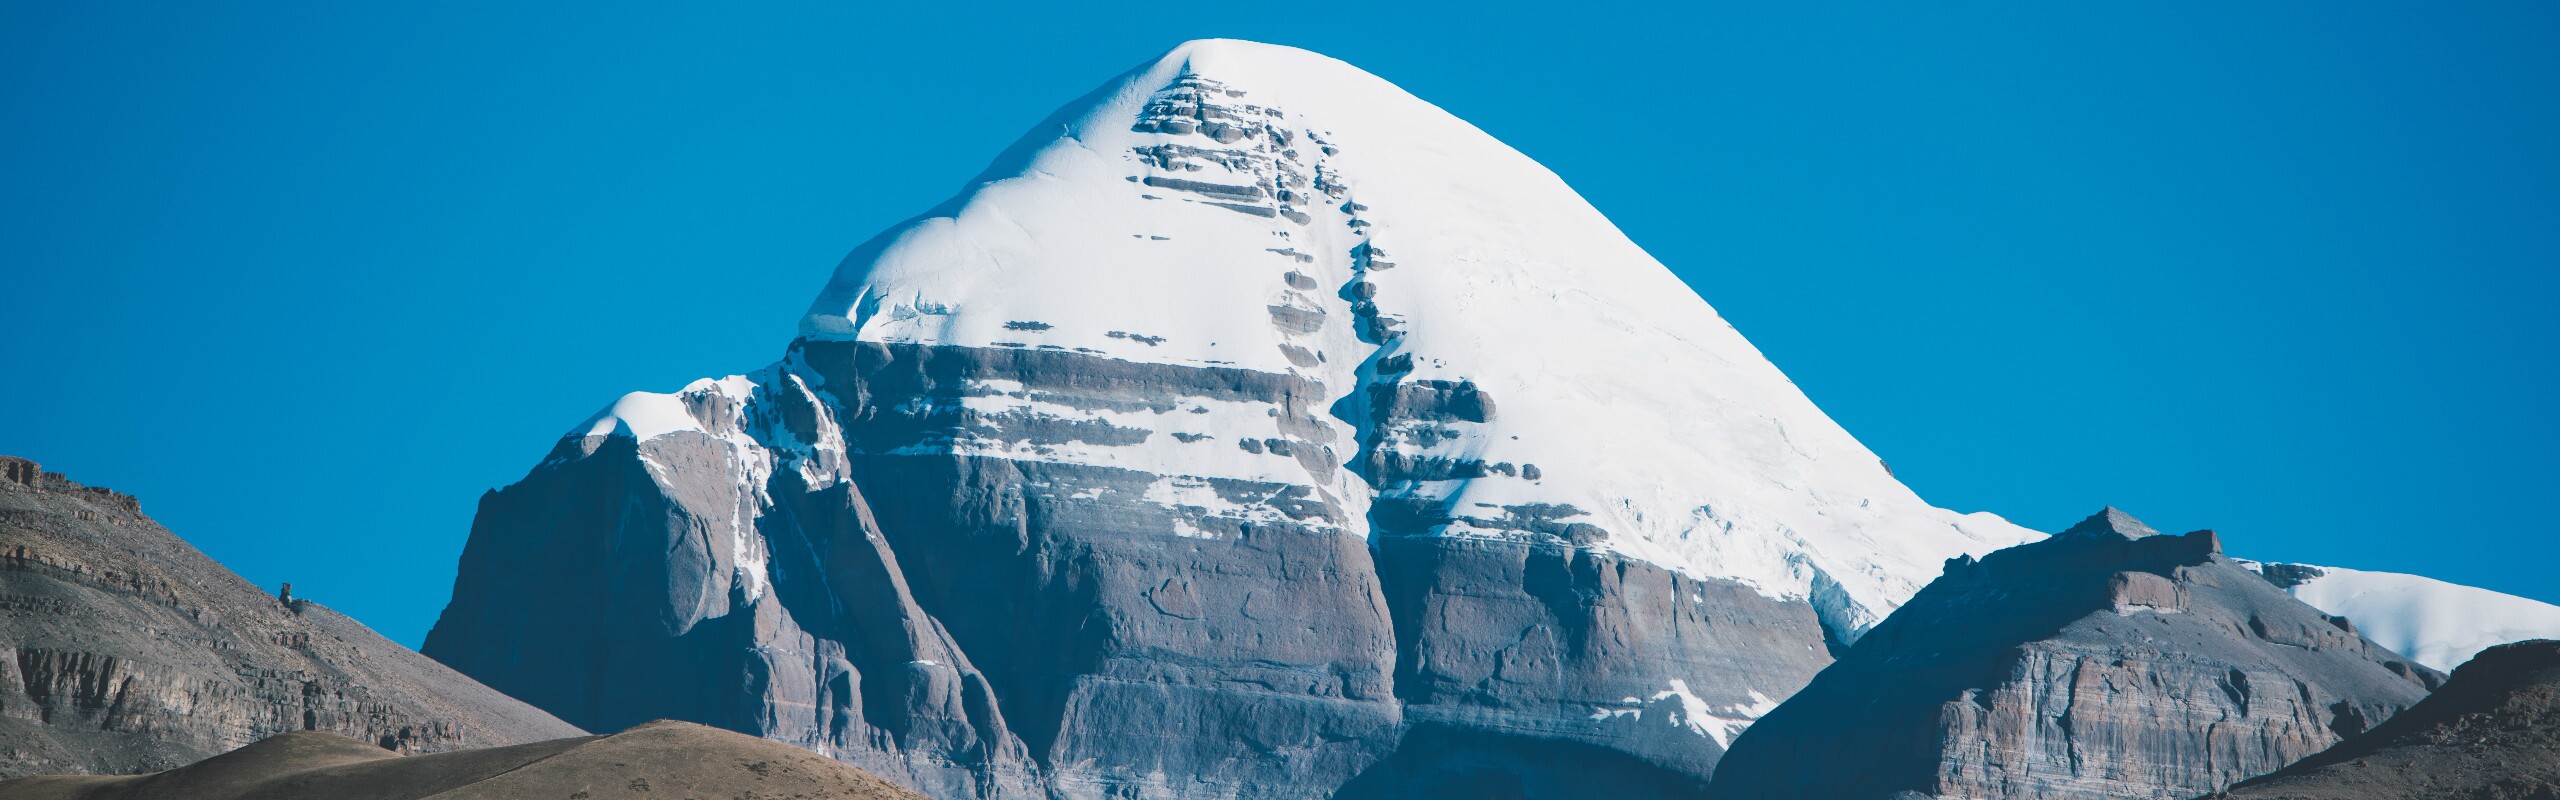 14-Day Tibet Tour with Mt. Kailash and Lake Manasarovar